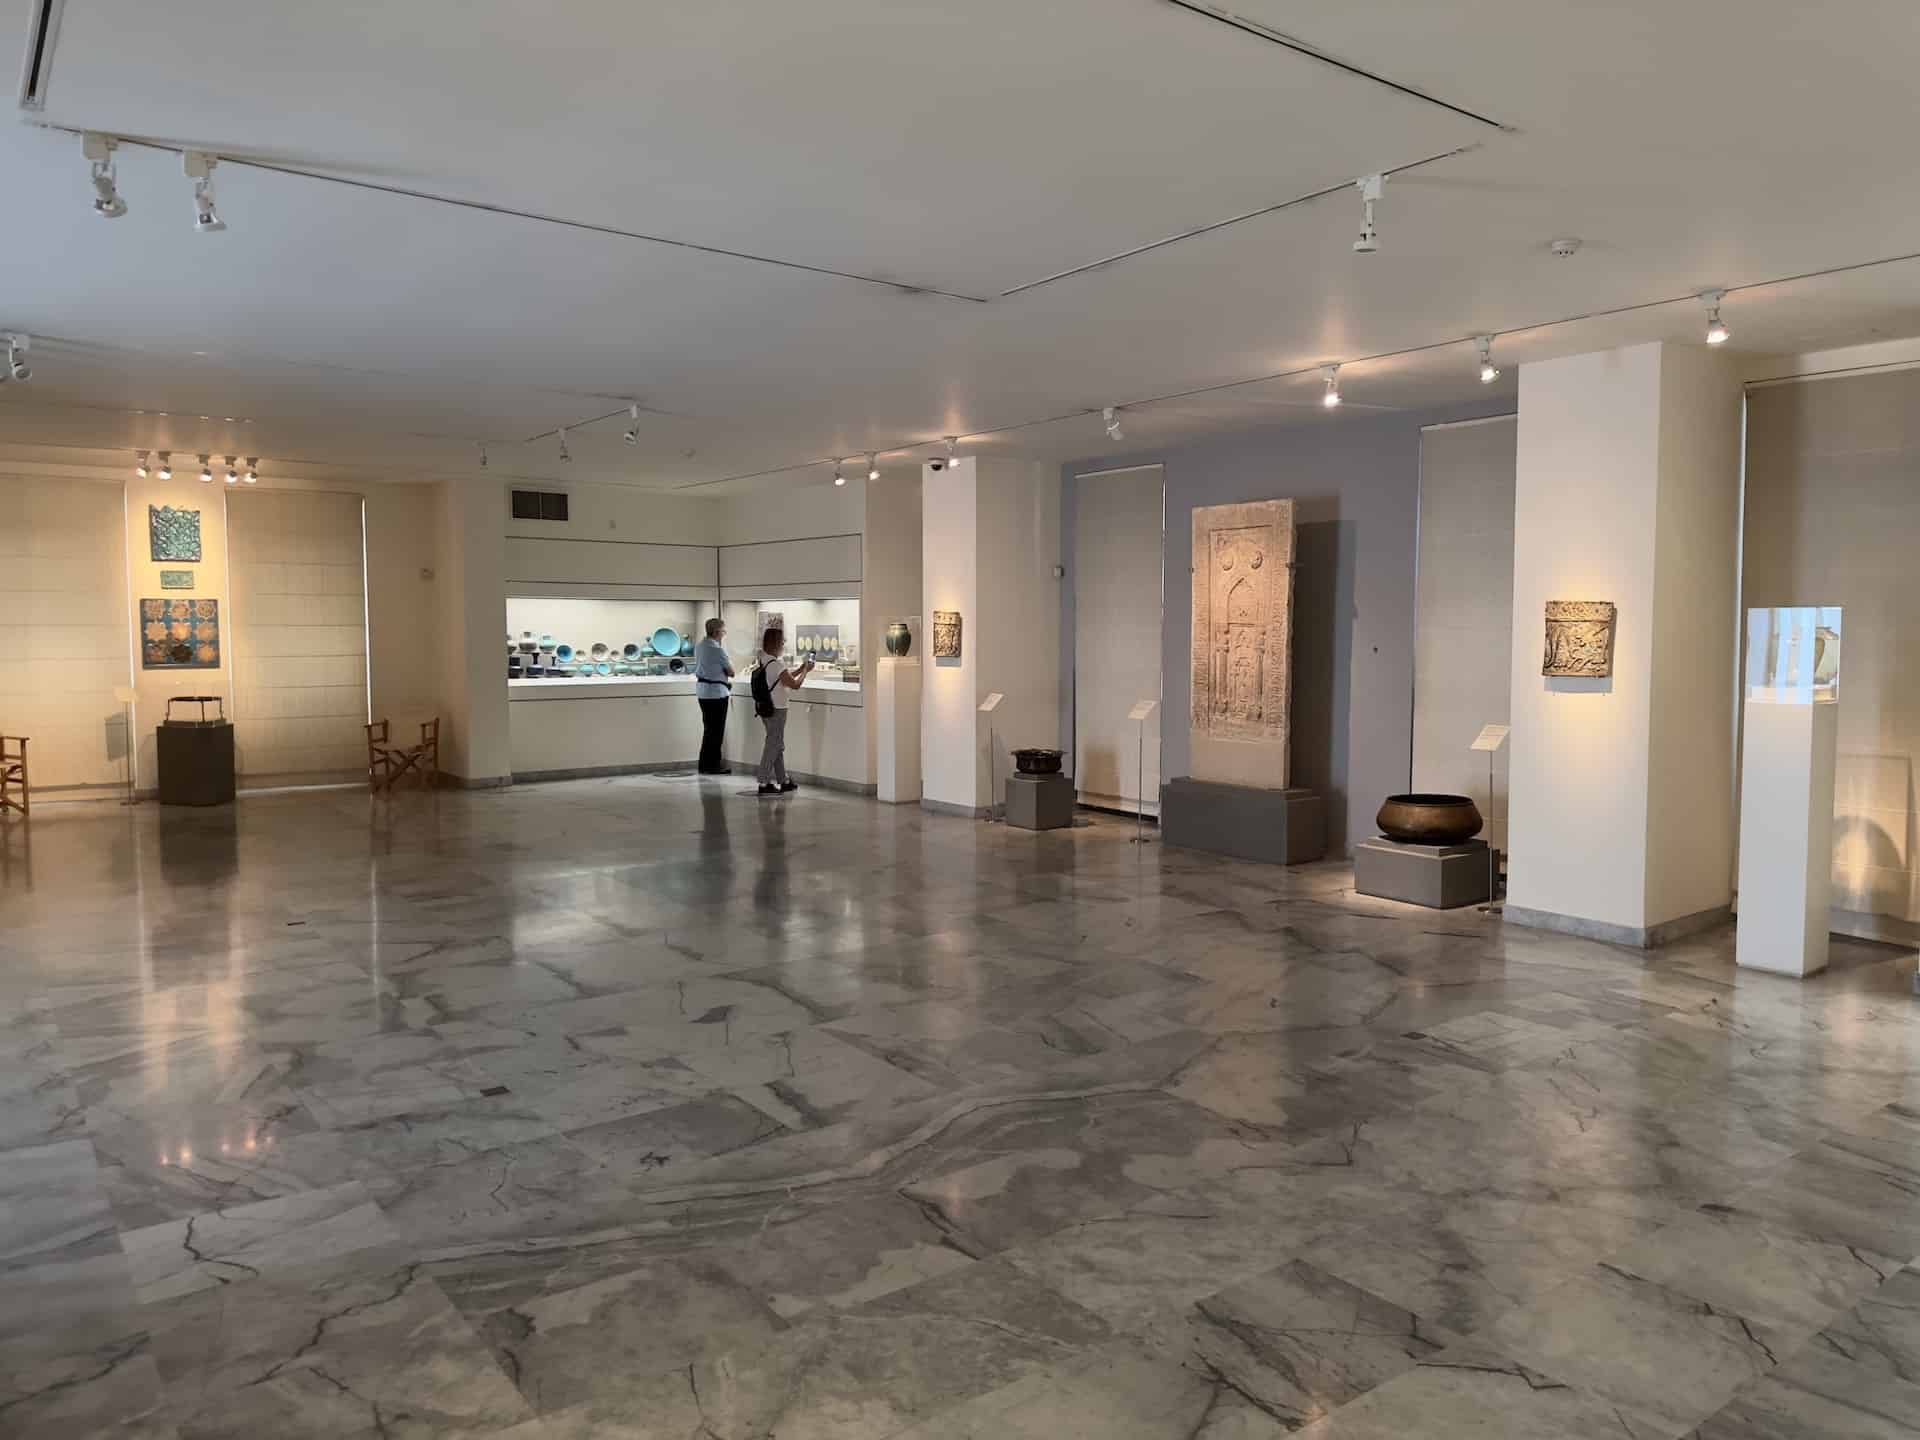 Gallery II at the Benaki Museum of Islamic Art in Athens, Greece